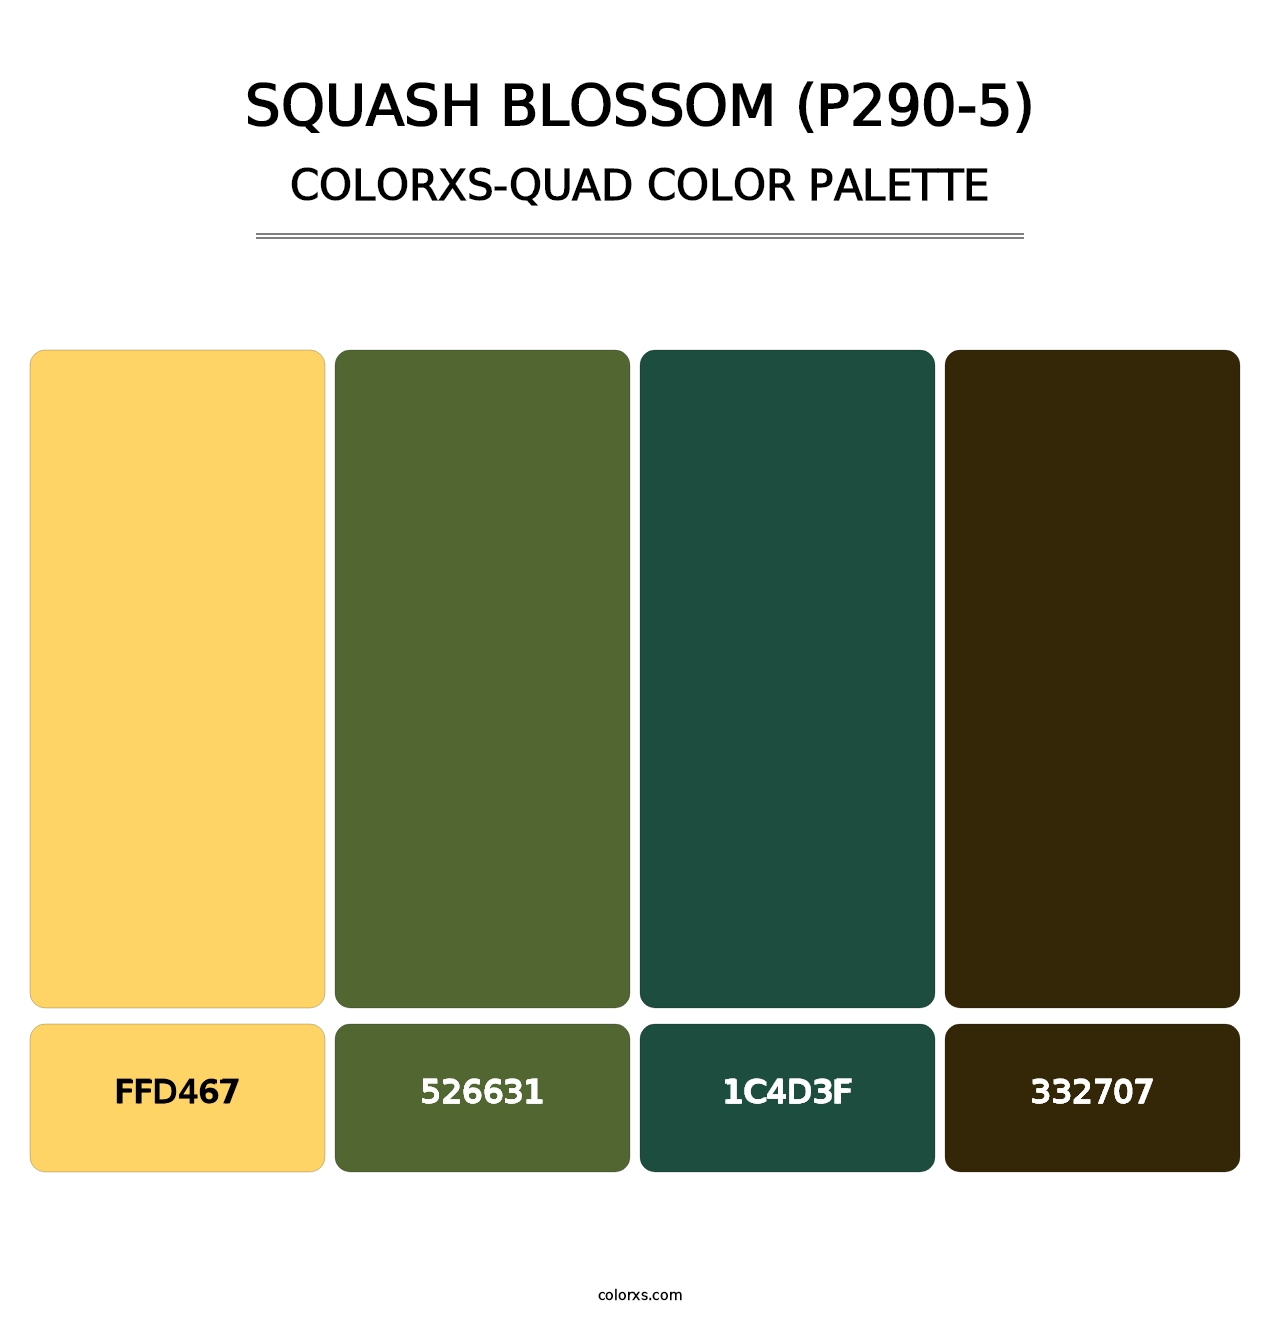 Squash Blossom (P290-5) - Colorxs Quad Palette